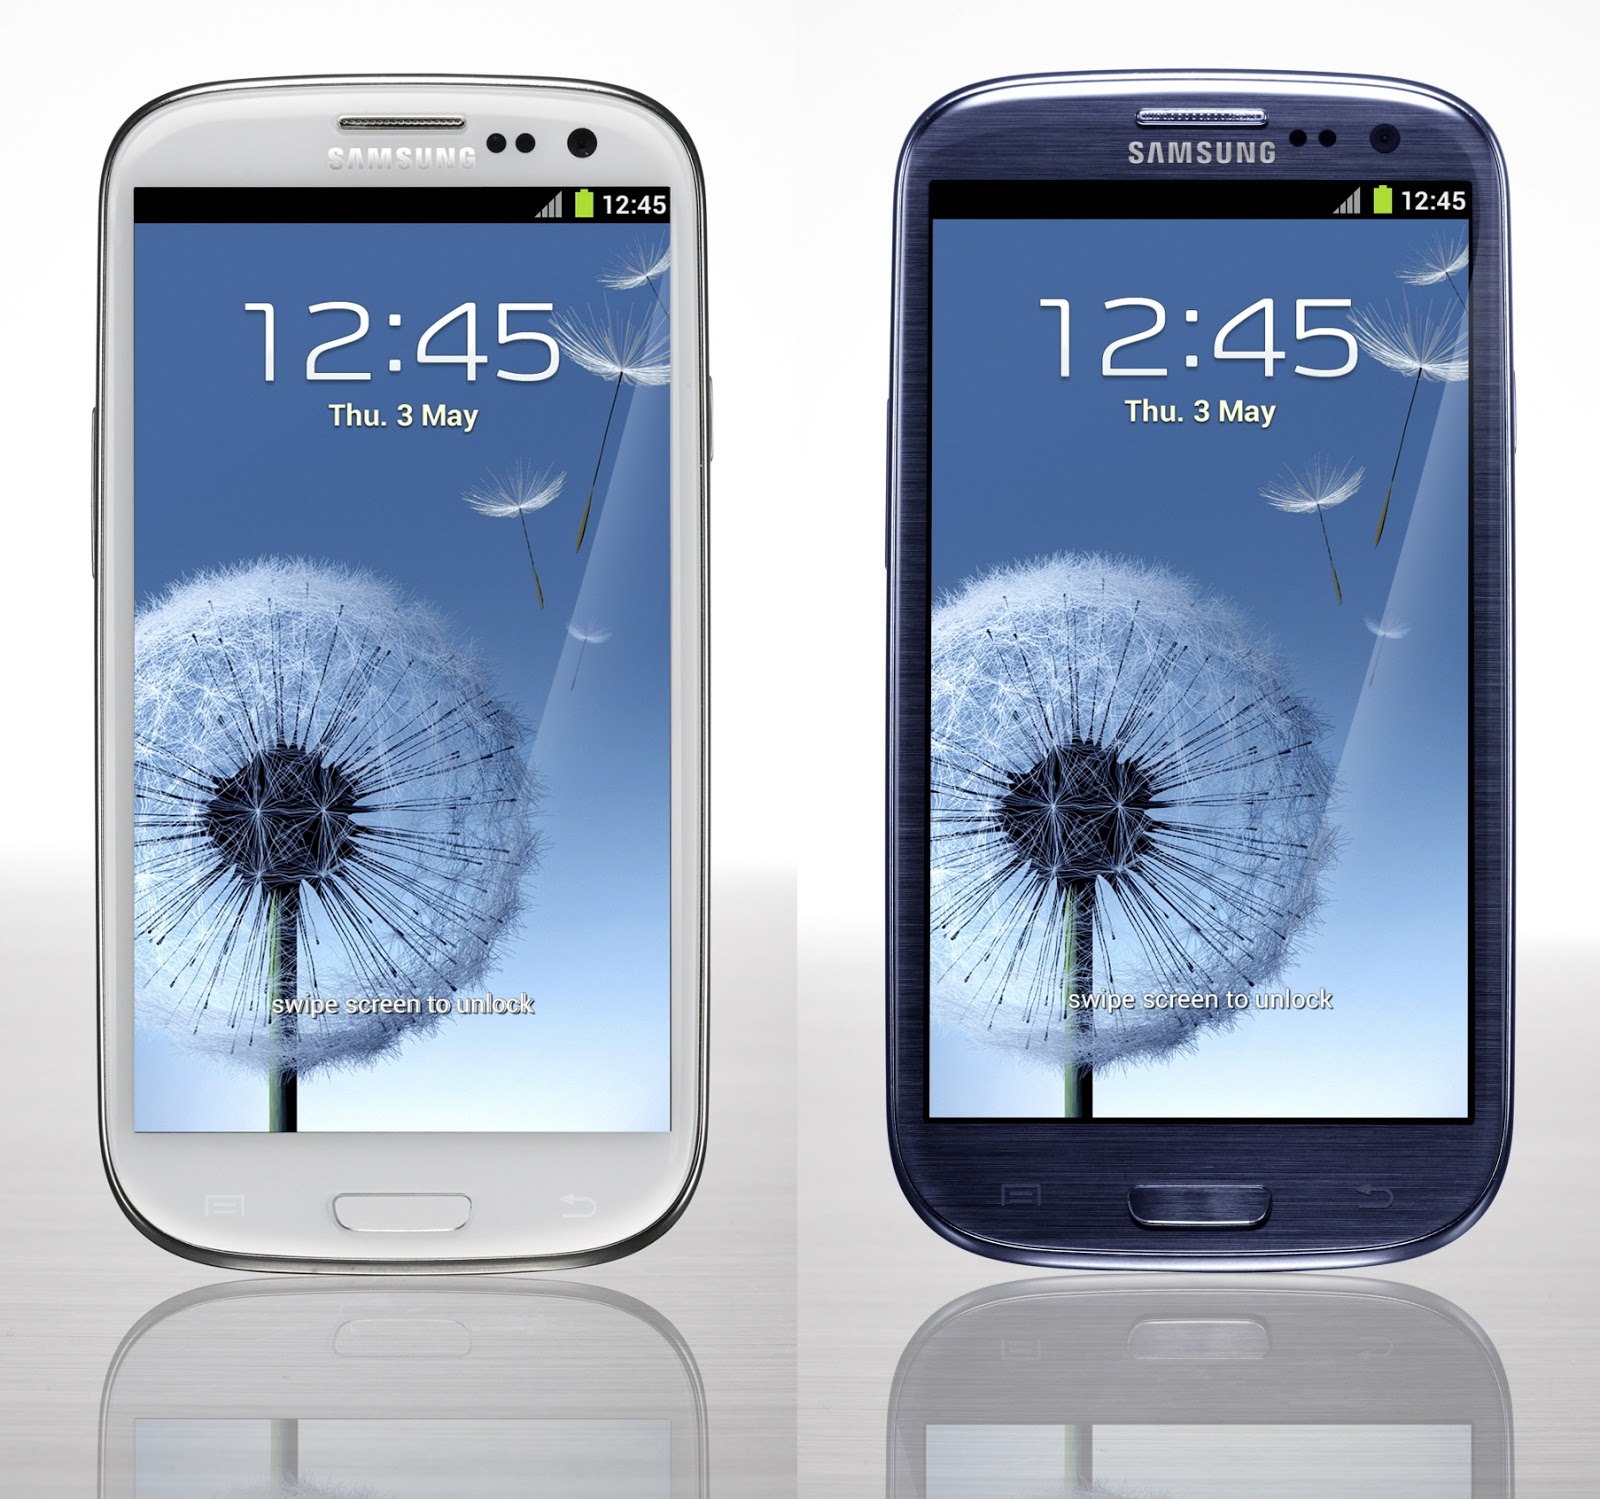 Samsung Galaxy S Mobile